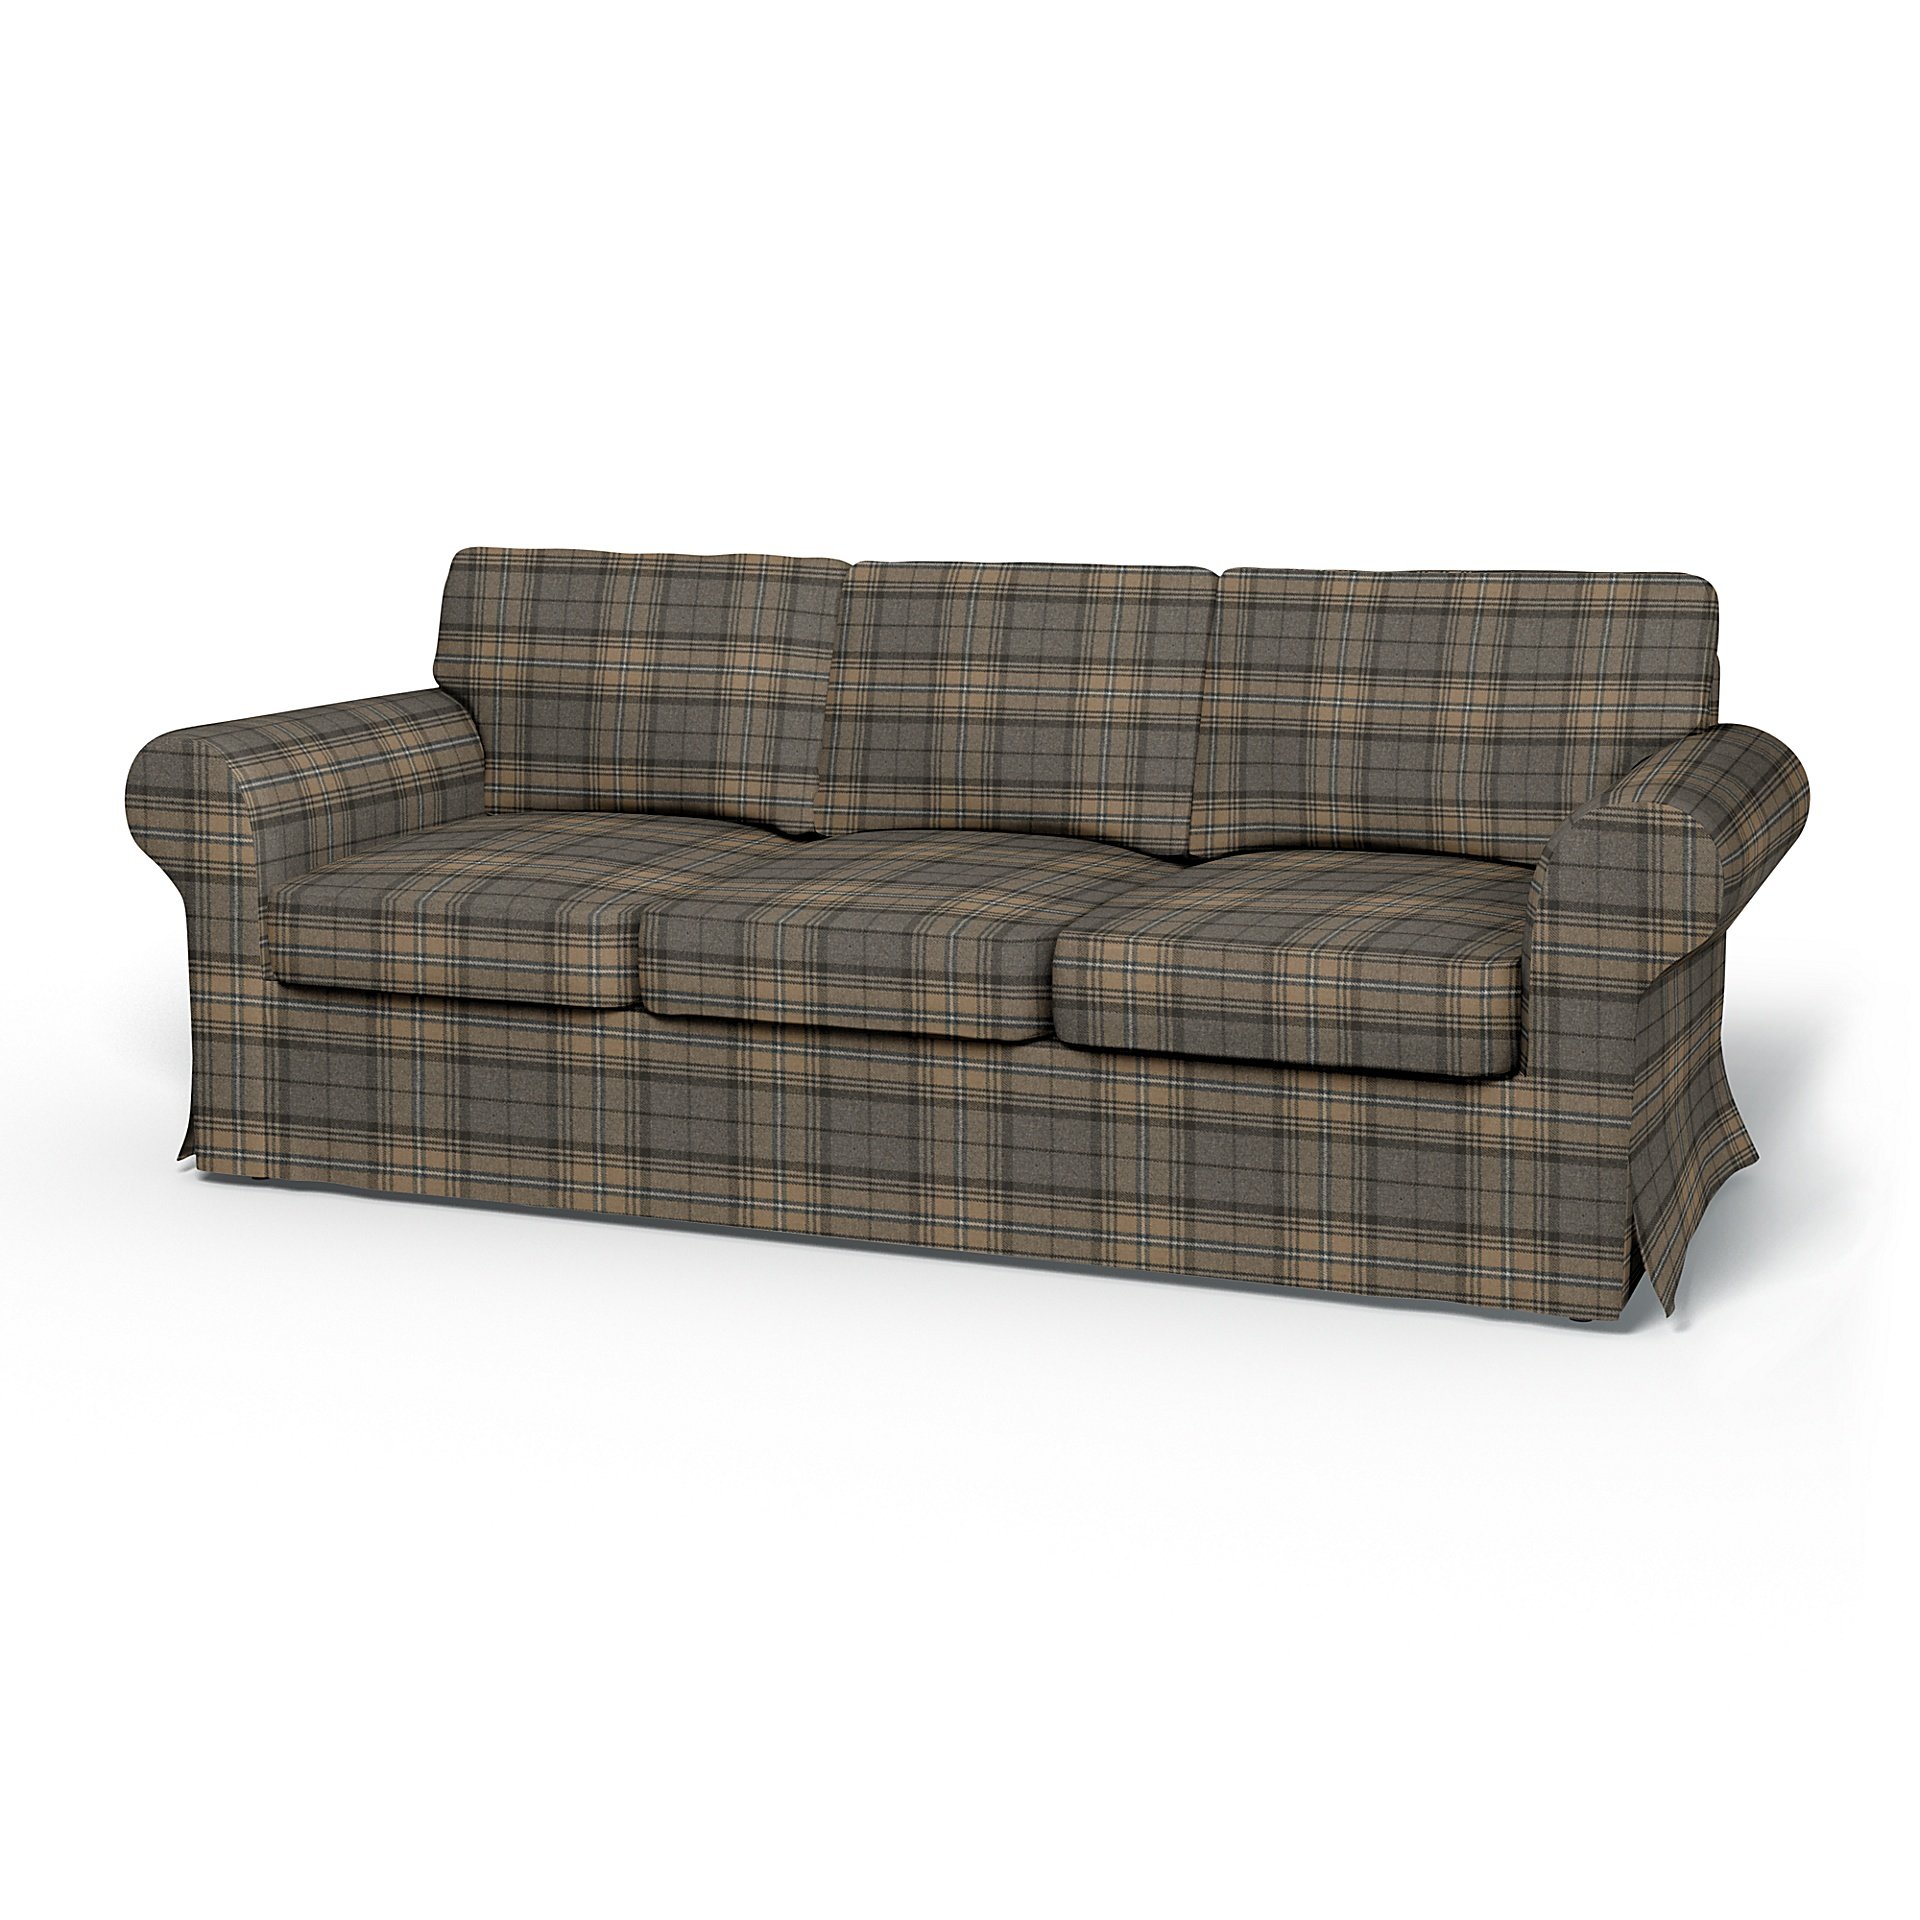 IKEA - Ektorp 3 Seater Sofa Bed Cover, Bark Brown, Wool - Bemz